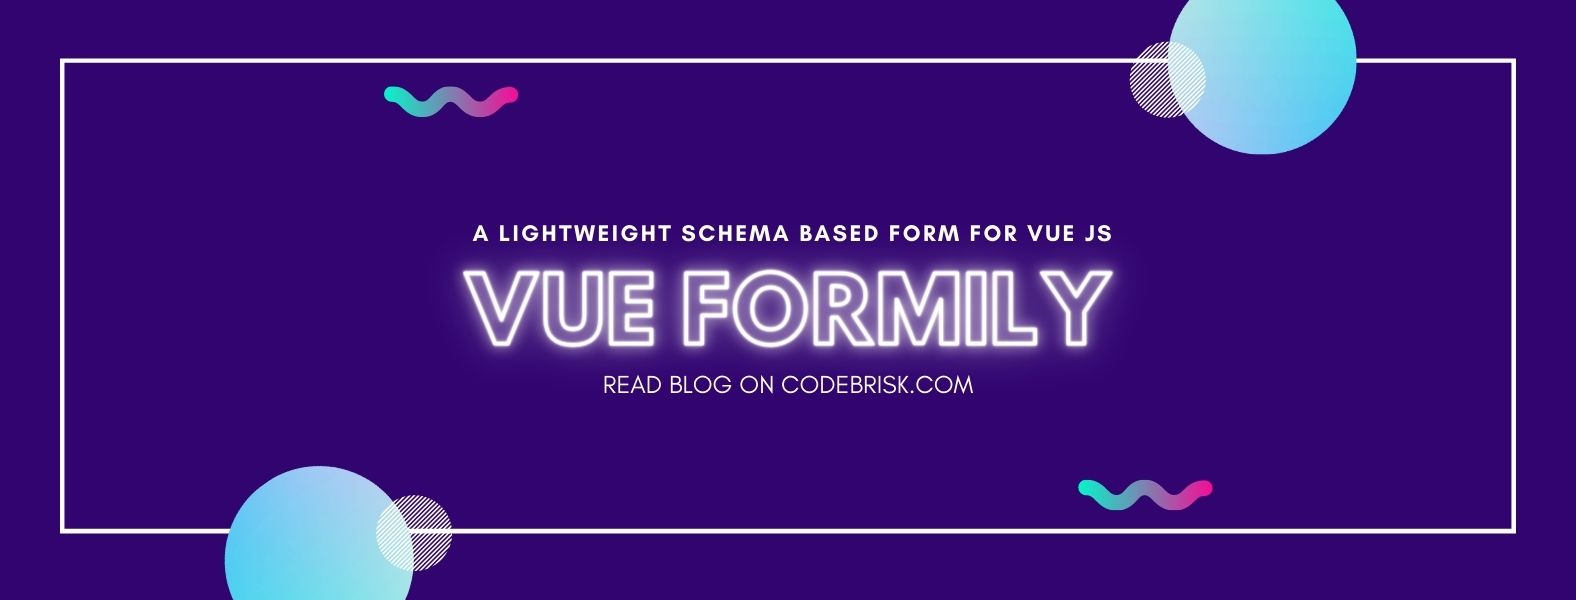 Vue-formily - A lightweight schema-based form for Vue js